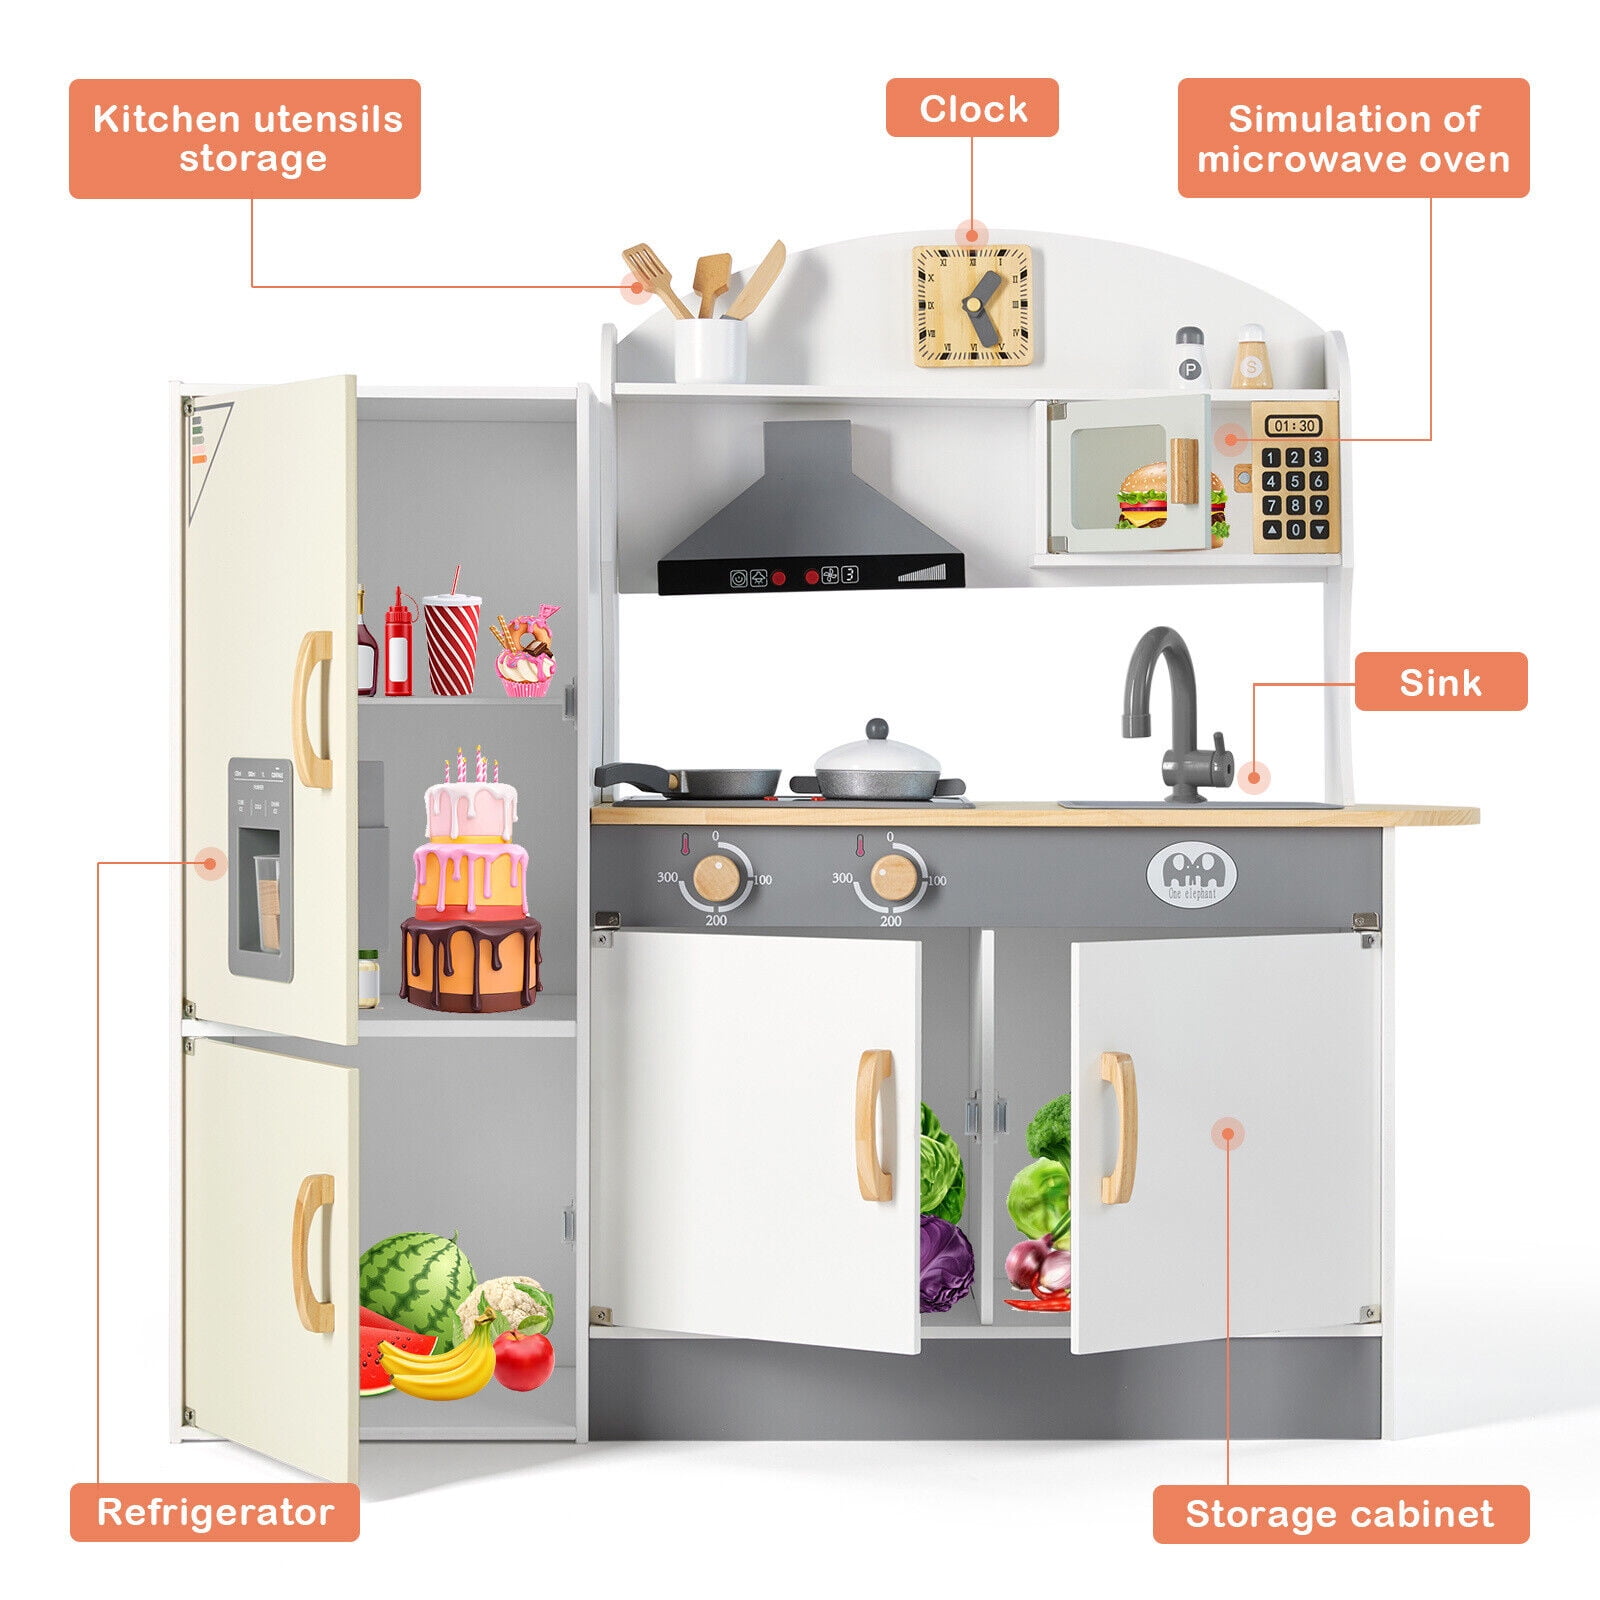 JoyAbit Kids Kitchen Set , Home Mini Appliances, Kitchen Toy Set